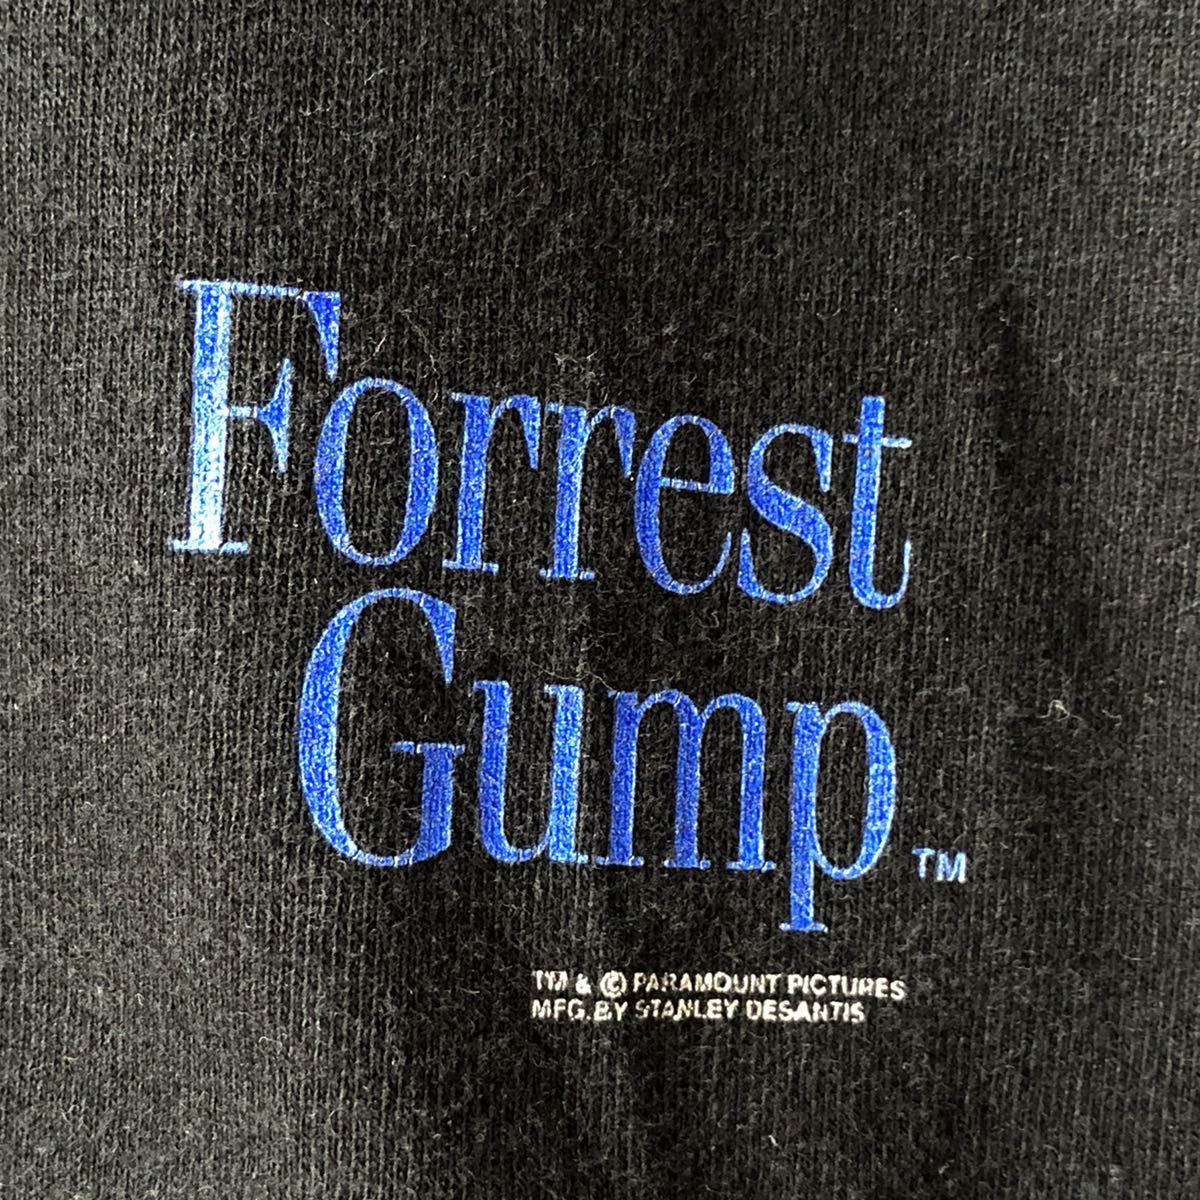 90s Forrest Gump Tシャツ 黒 ビンテージ 90年代 フォレストガンプ / 一期一会 トムハンクス 映画 ムービー オリジナル  ヴィンテージ